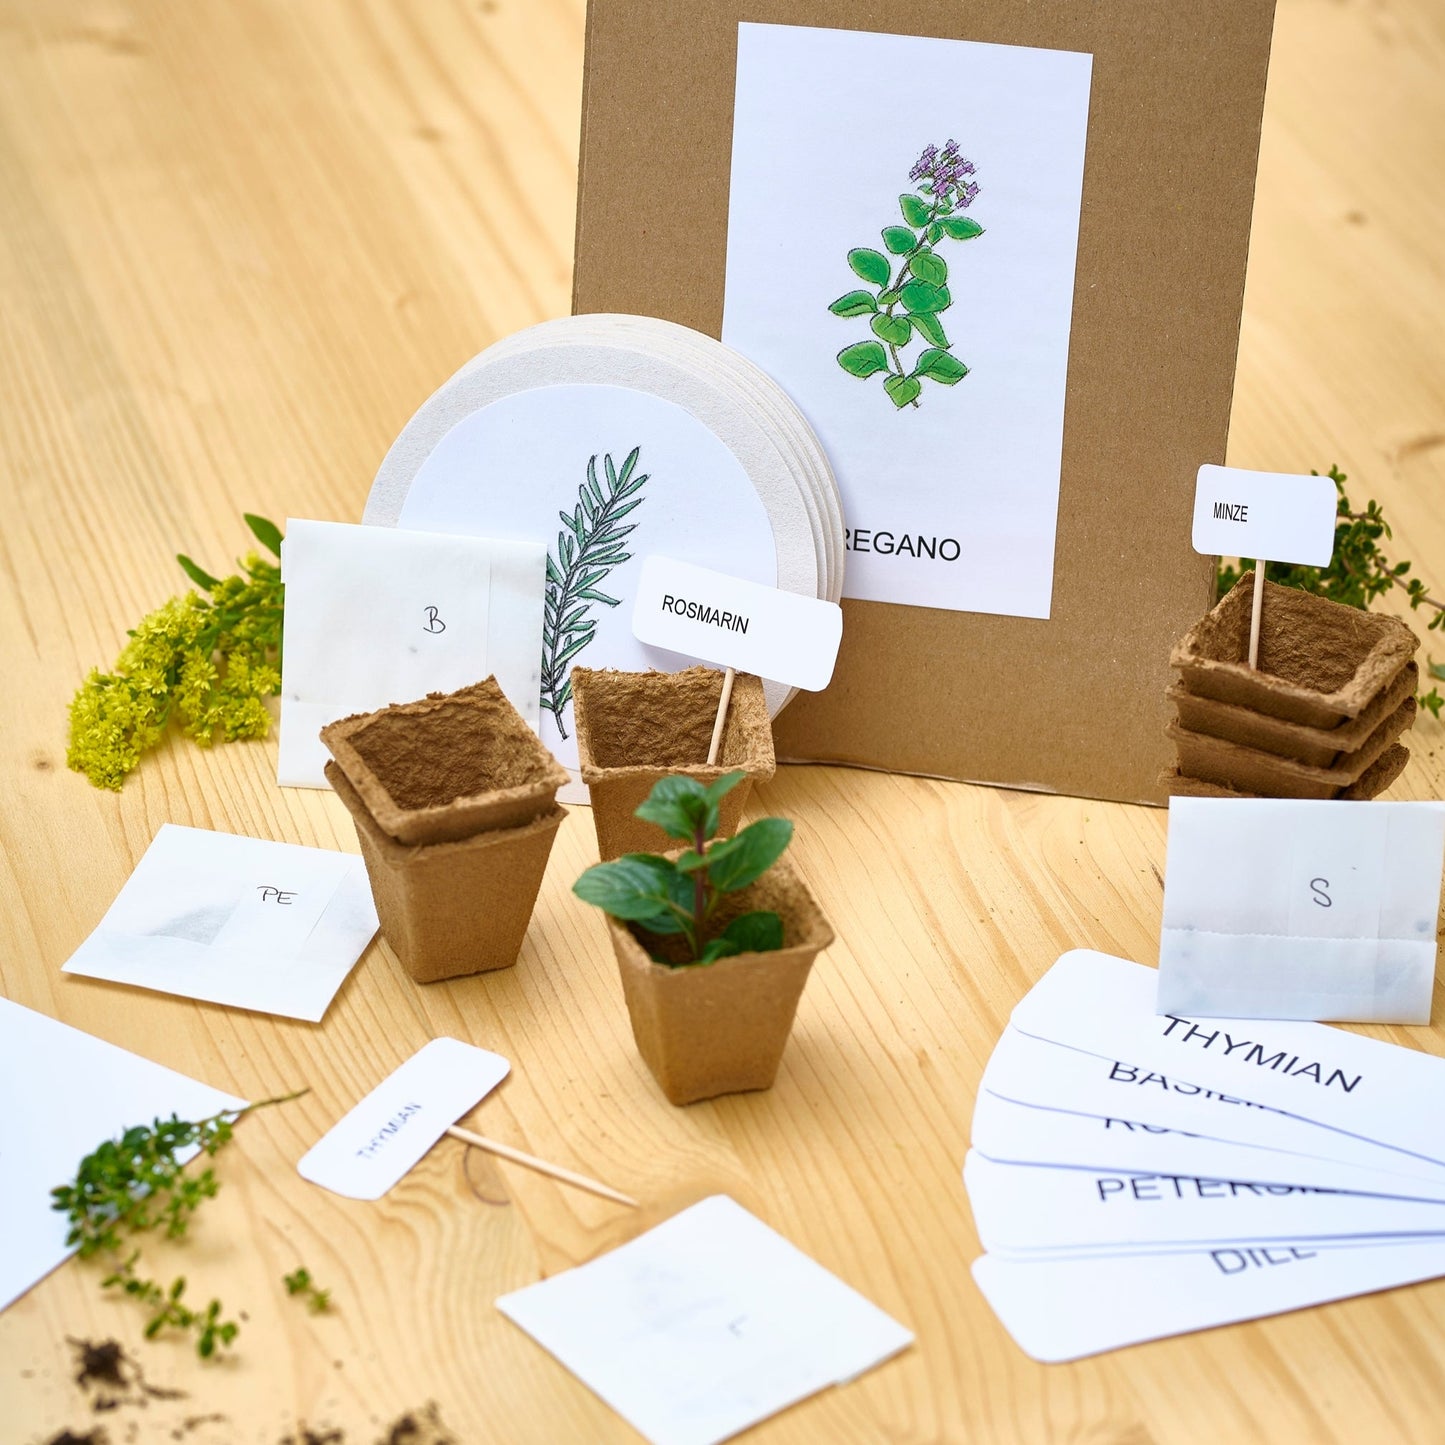 Kräuter - Spiel- und Lernpaket rund um das Thema "Kräuter" - großes Materialpaket inkl Saatgut